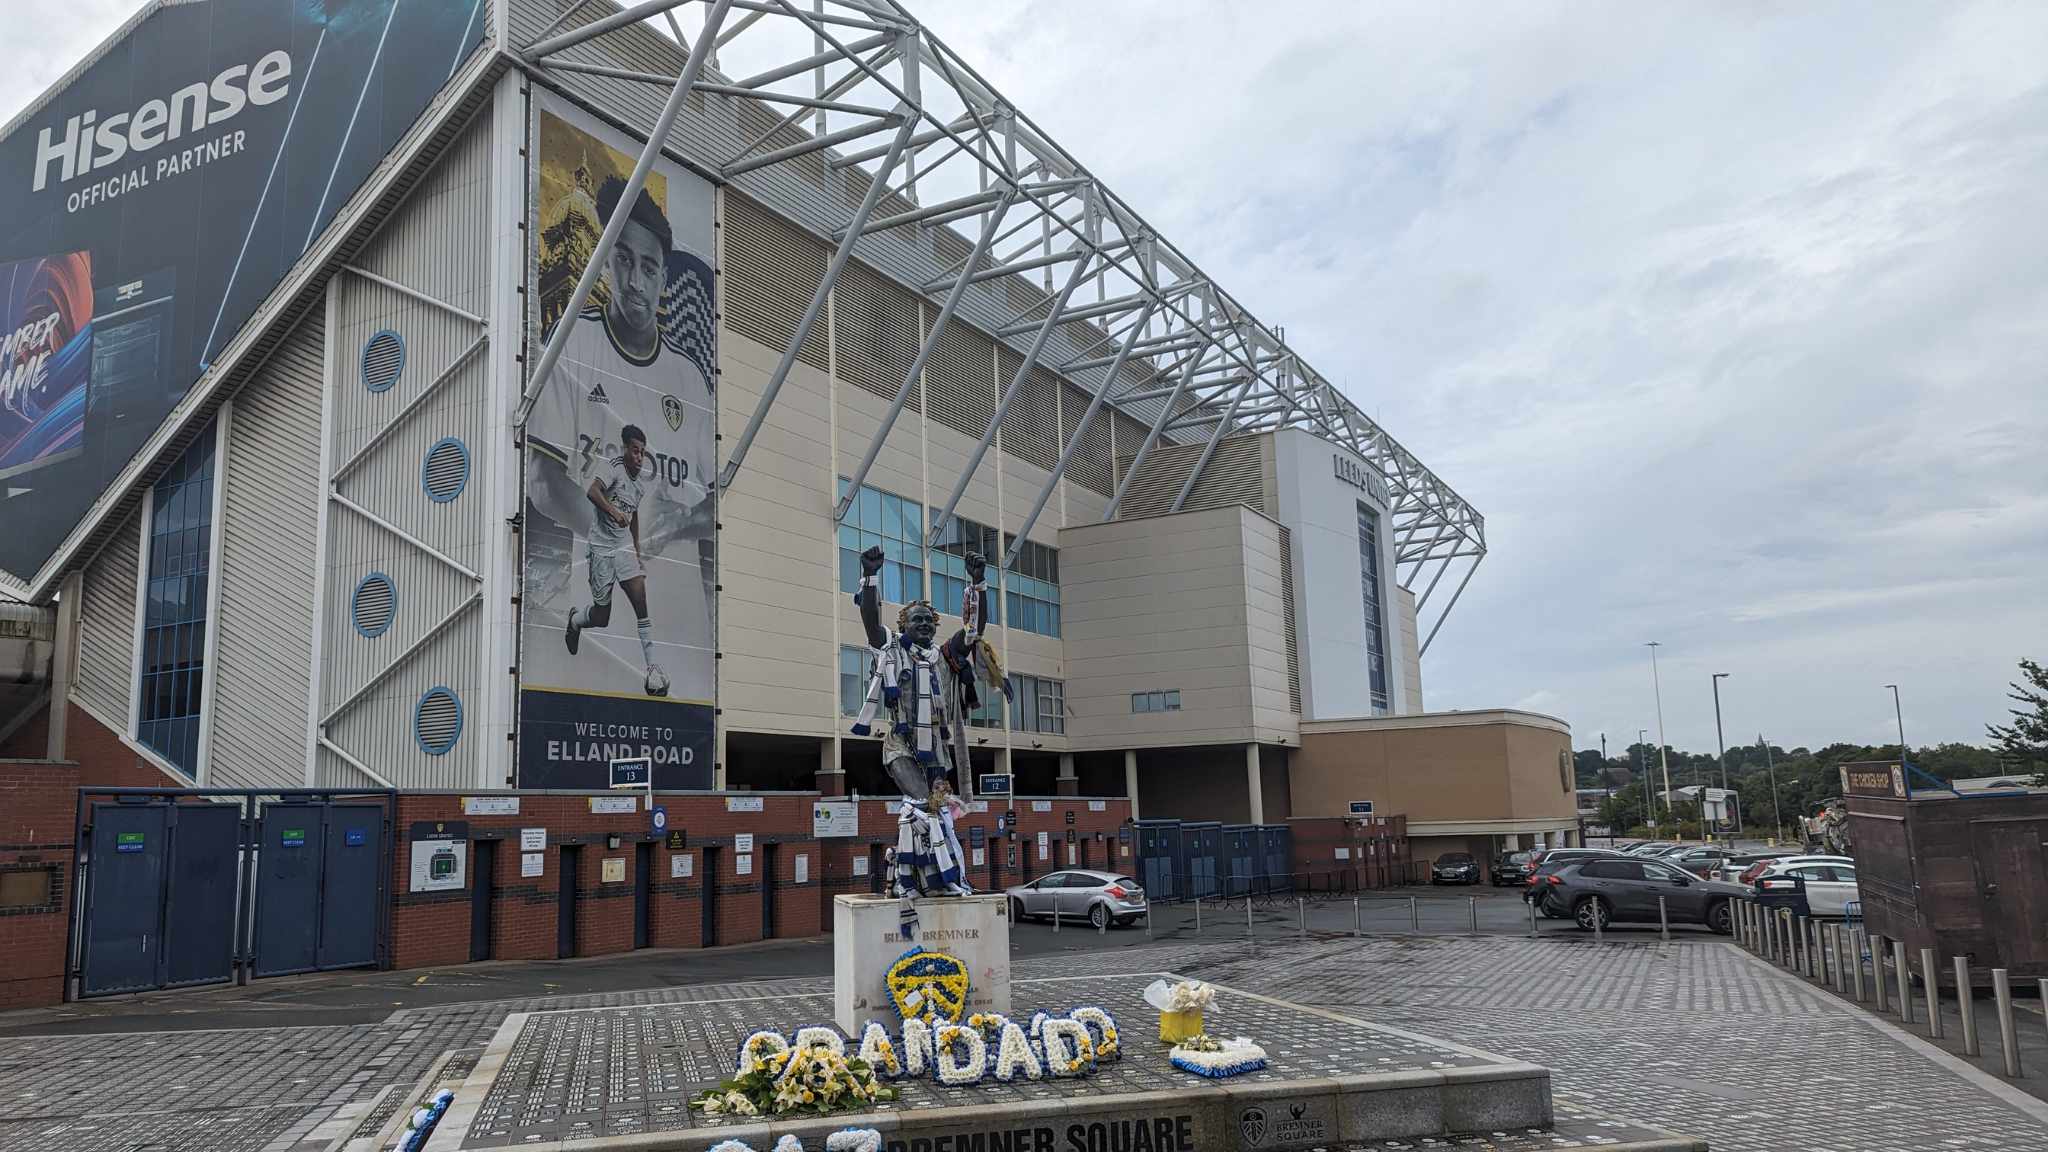 Leeds United ground with Billy Bremner statue